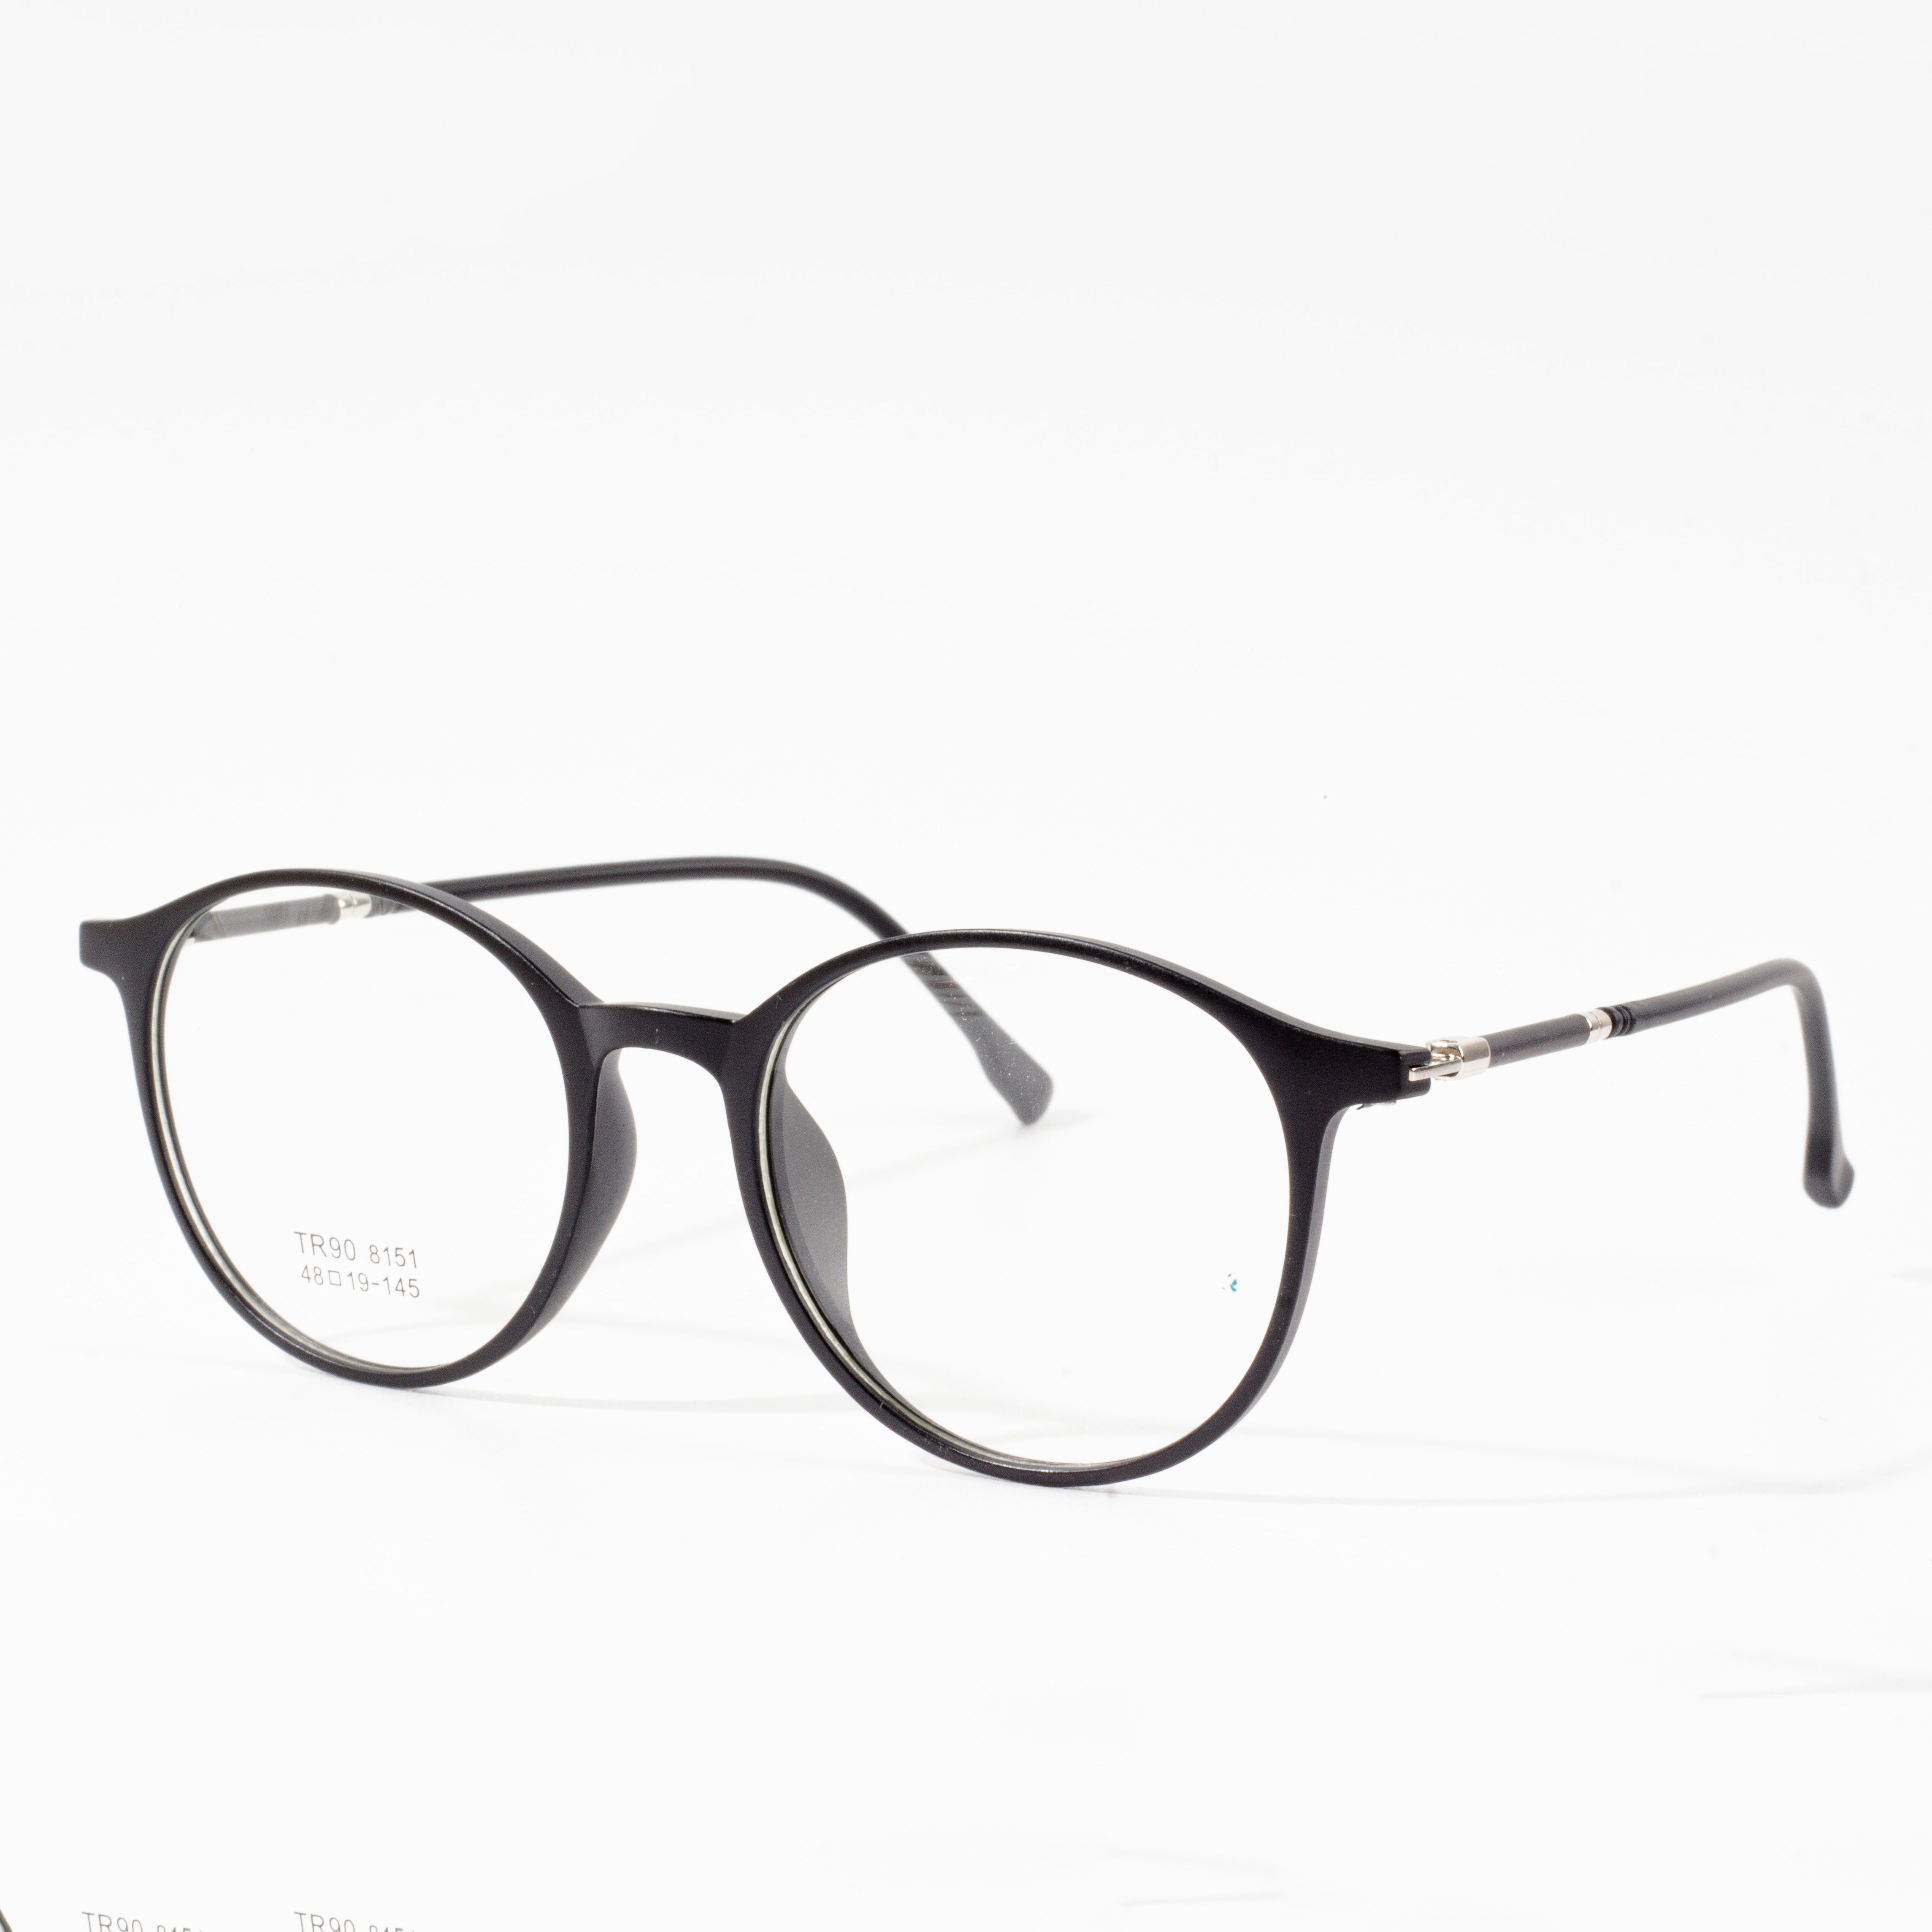 Mens & Mulieres Designer Frames - Eyeglasses.com · https://www.eyeglasses.com/ (888) 896-3885 Shop Designer Frames from Top Global Eyeglass Brands For Half Off Retail Prices Hodie.